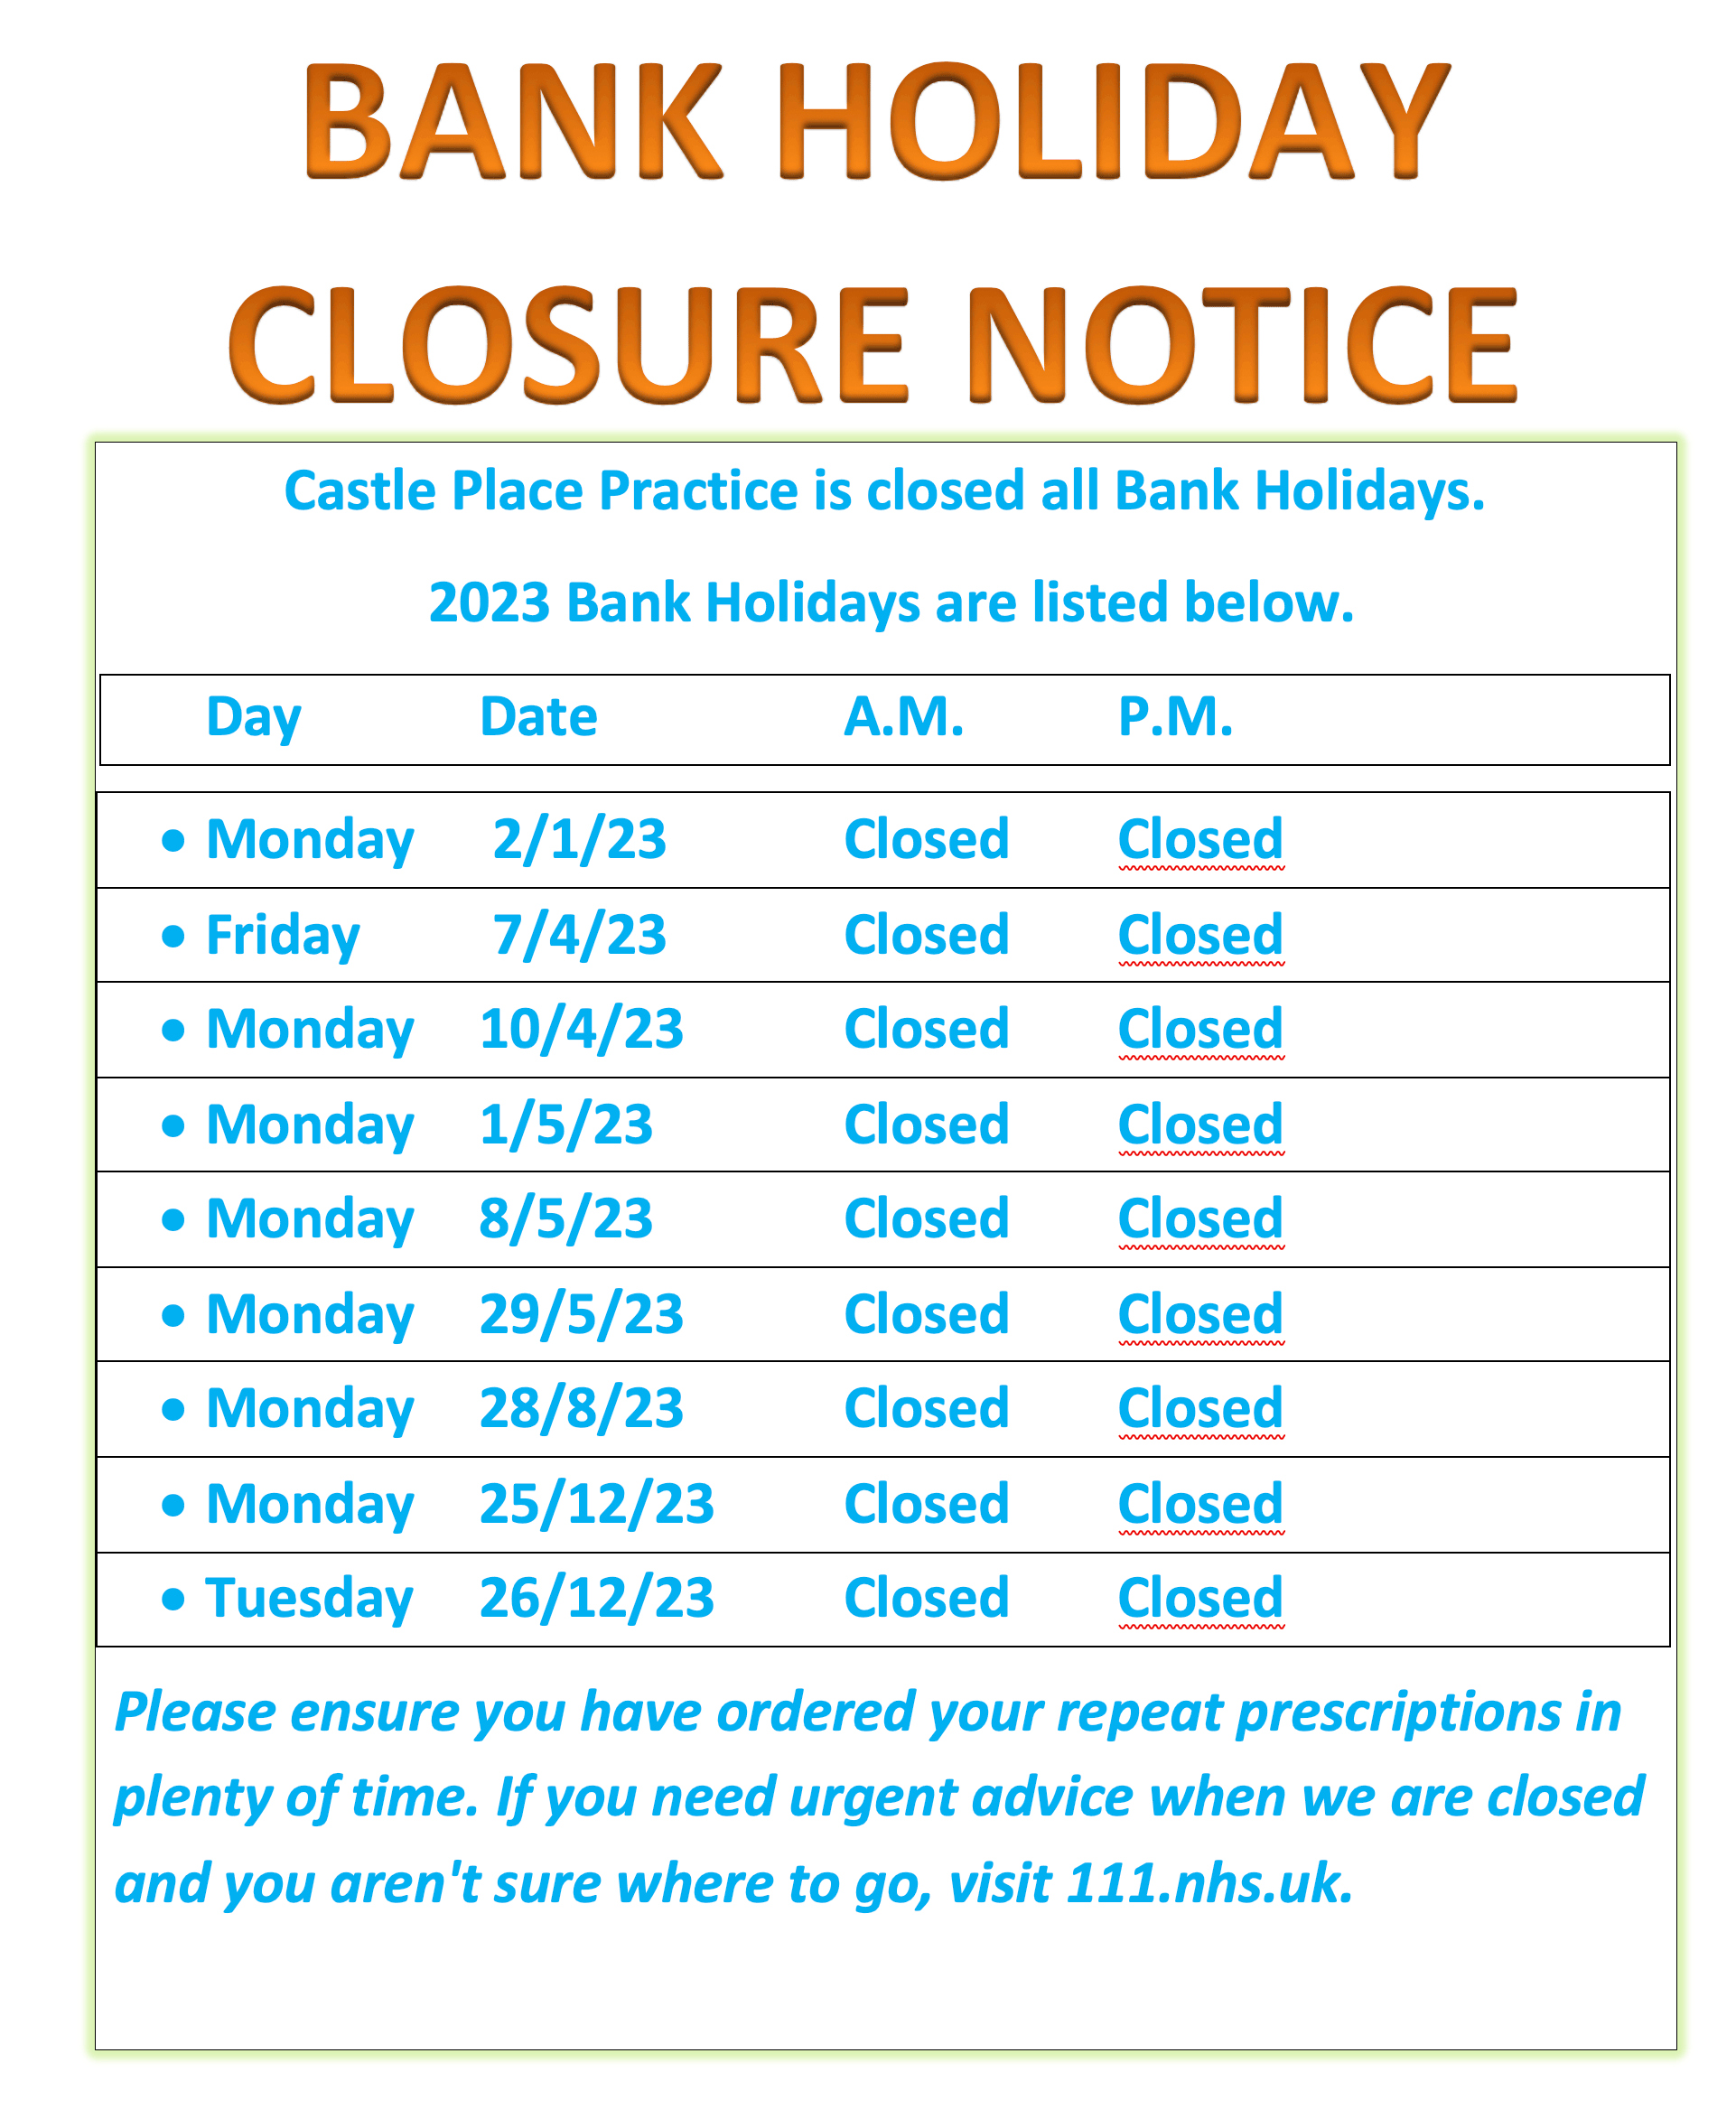 Bank holiday closure notice